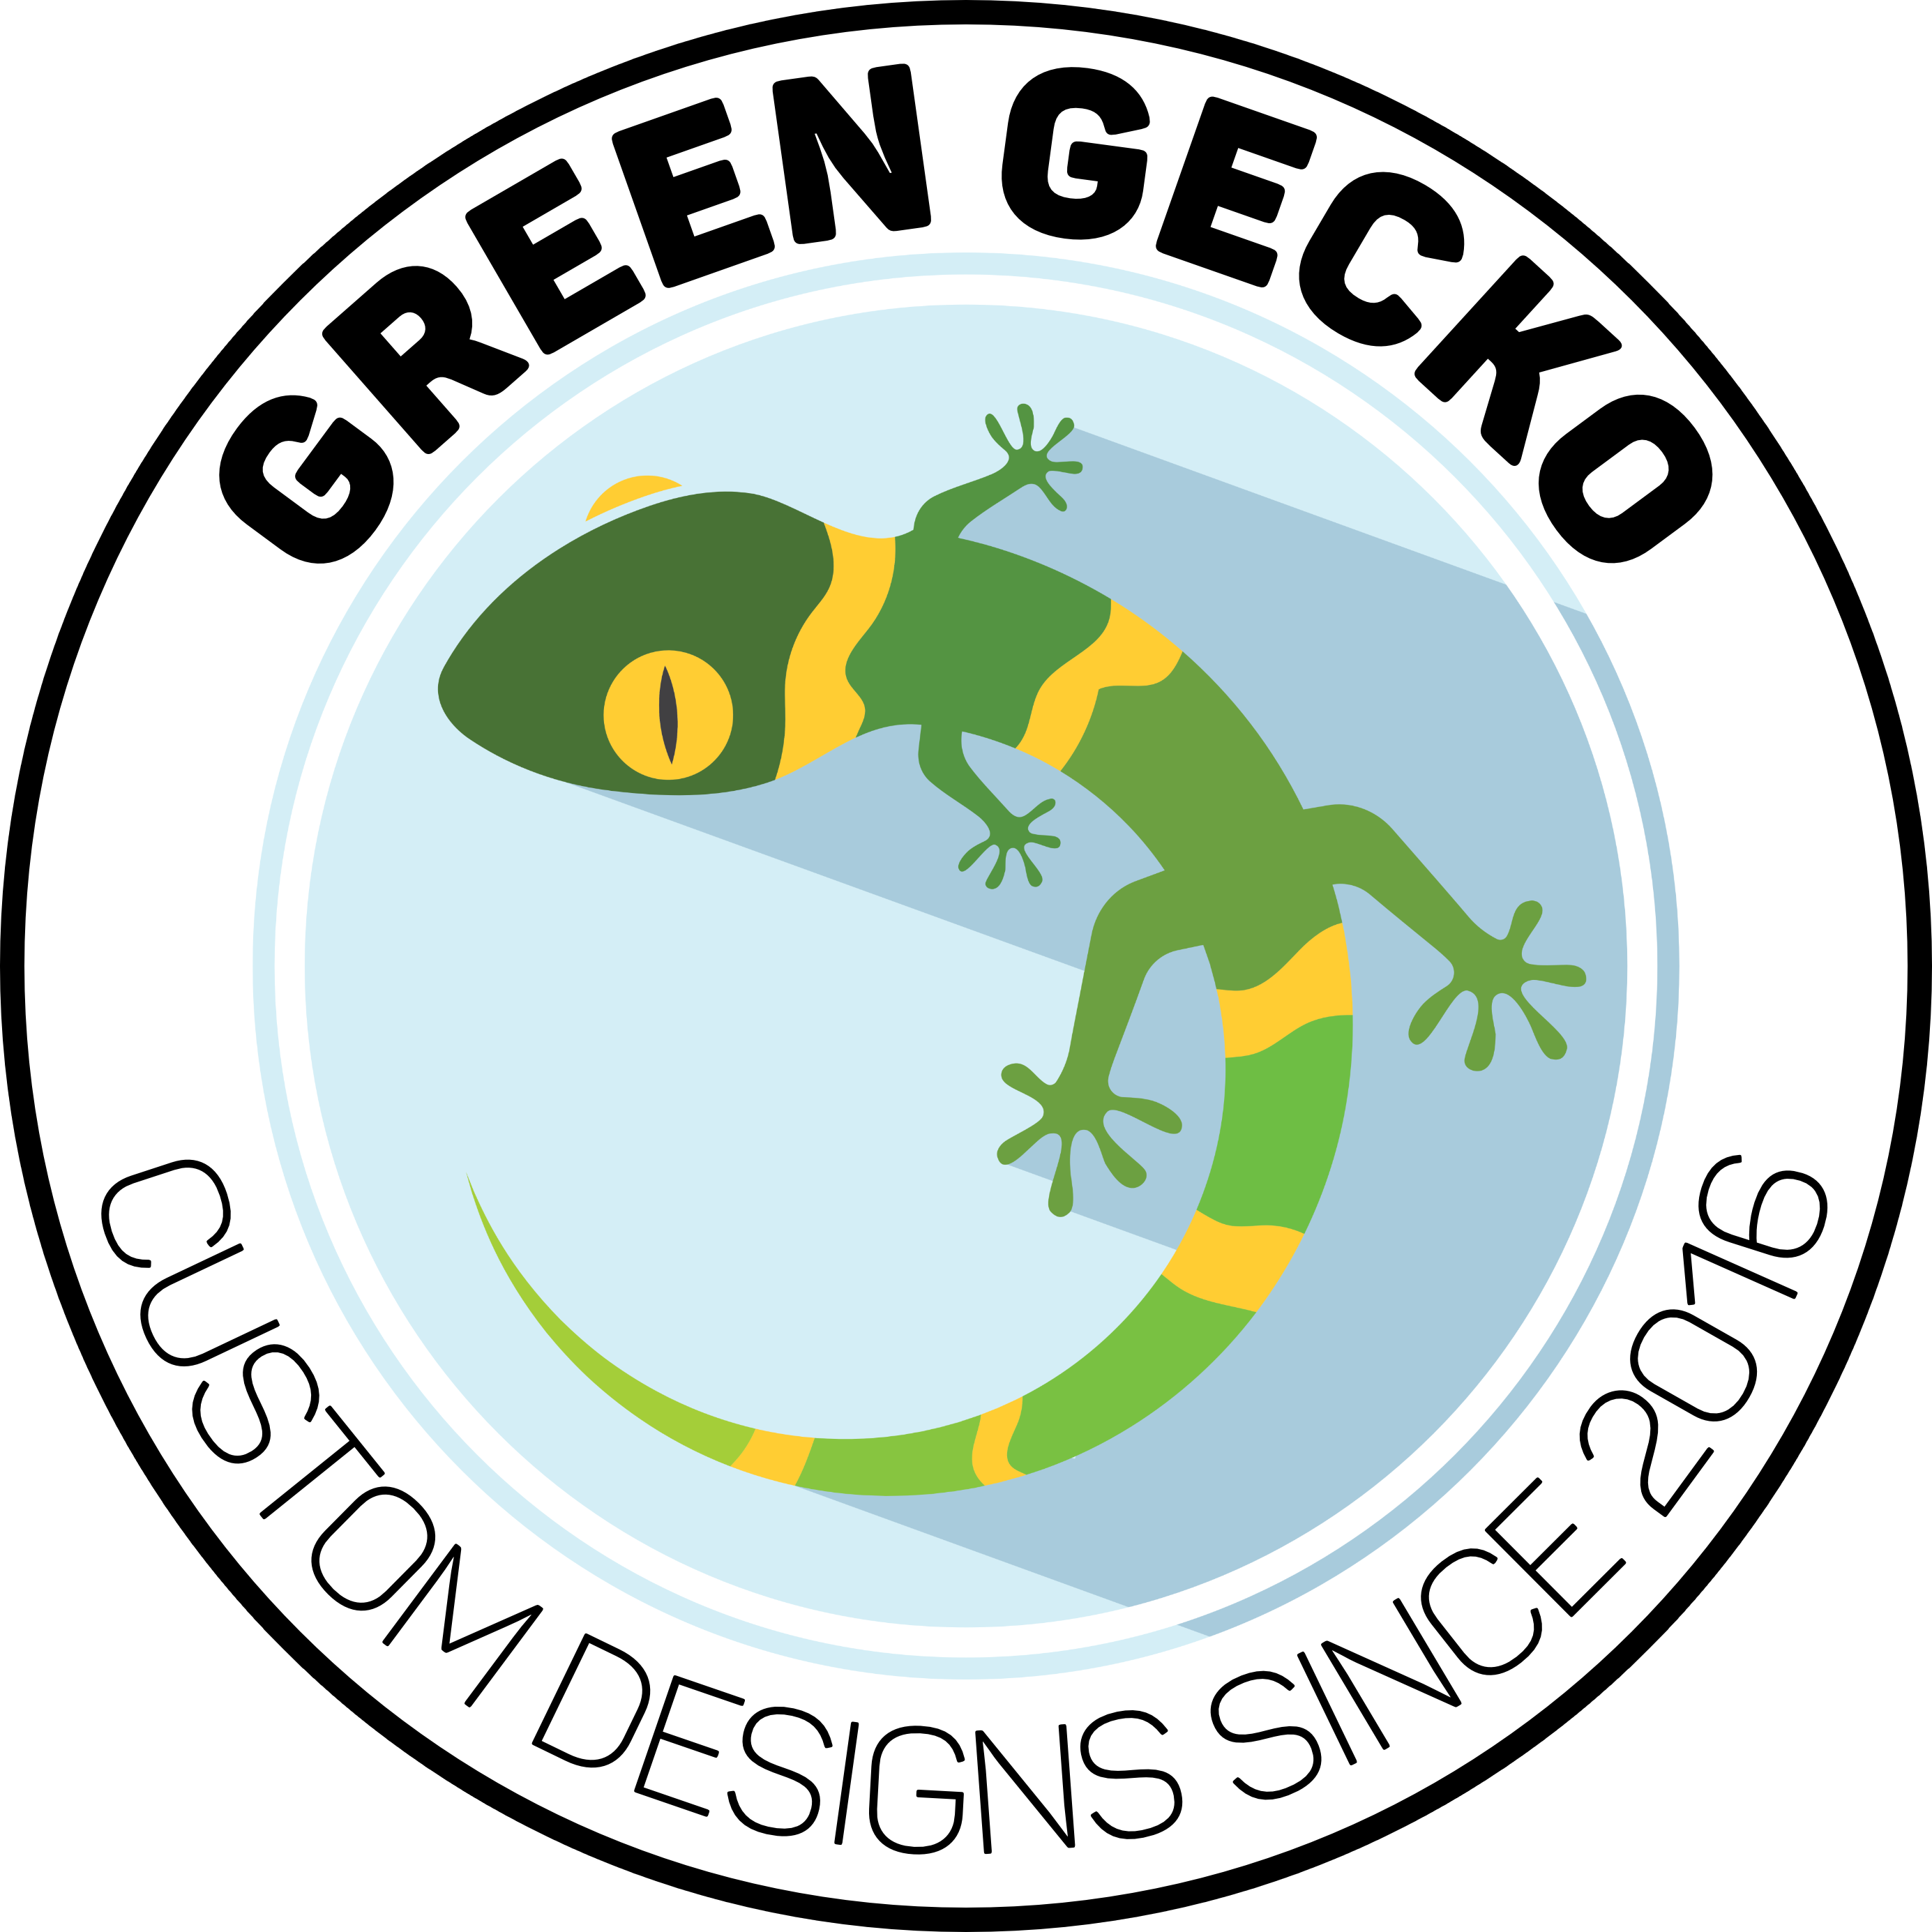 Green Gecko Workshop